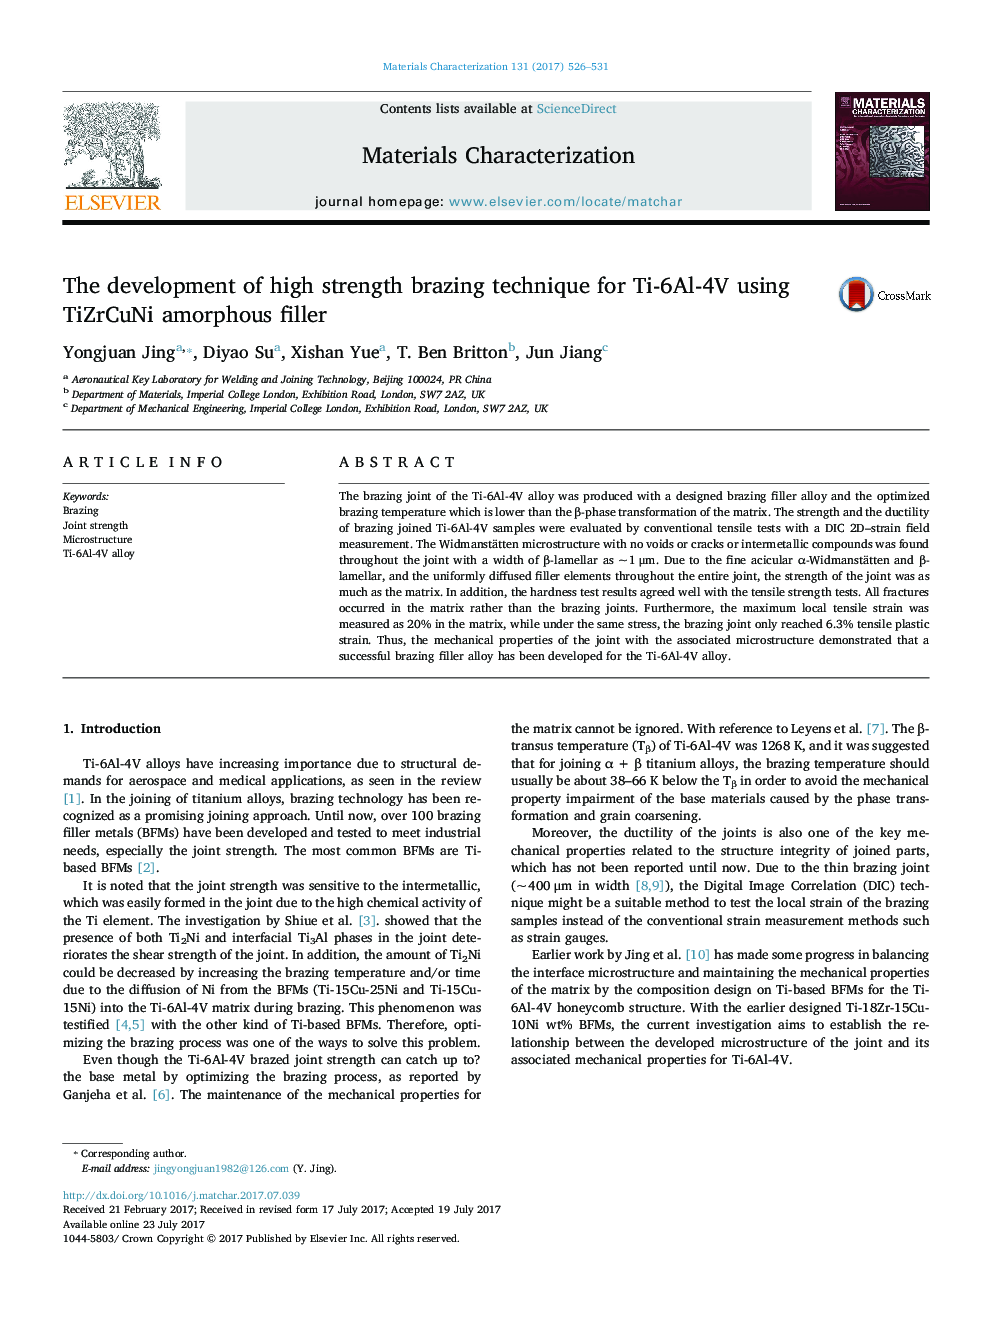 The development of high strength brazing technique for Ti-6Al-4V using TiZrCuNi amorphous filler